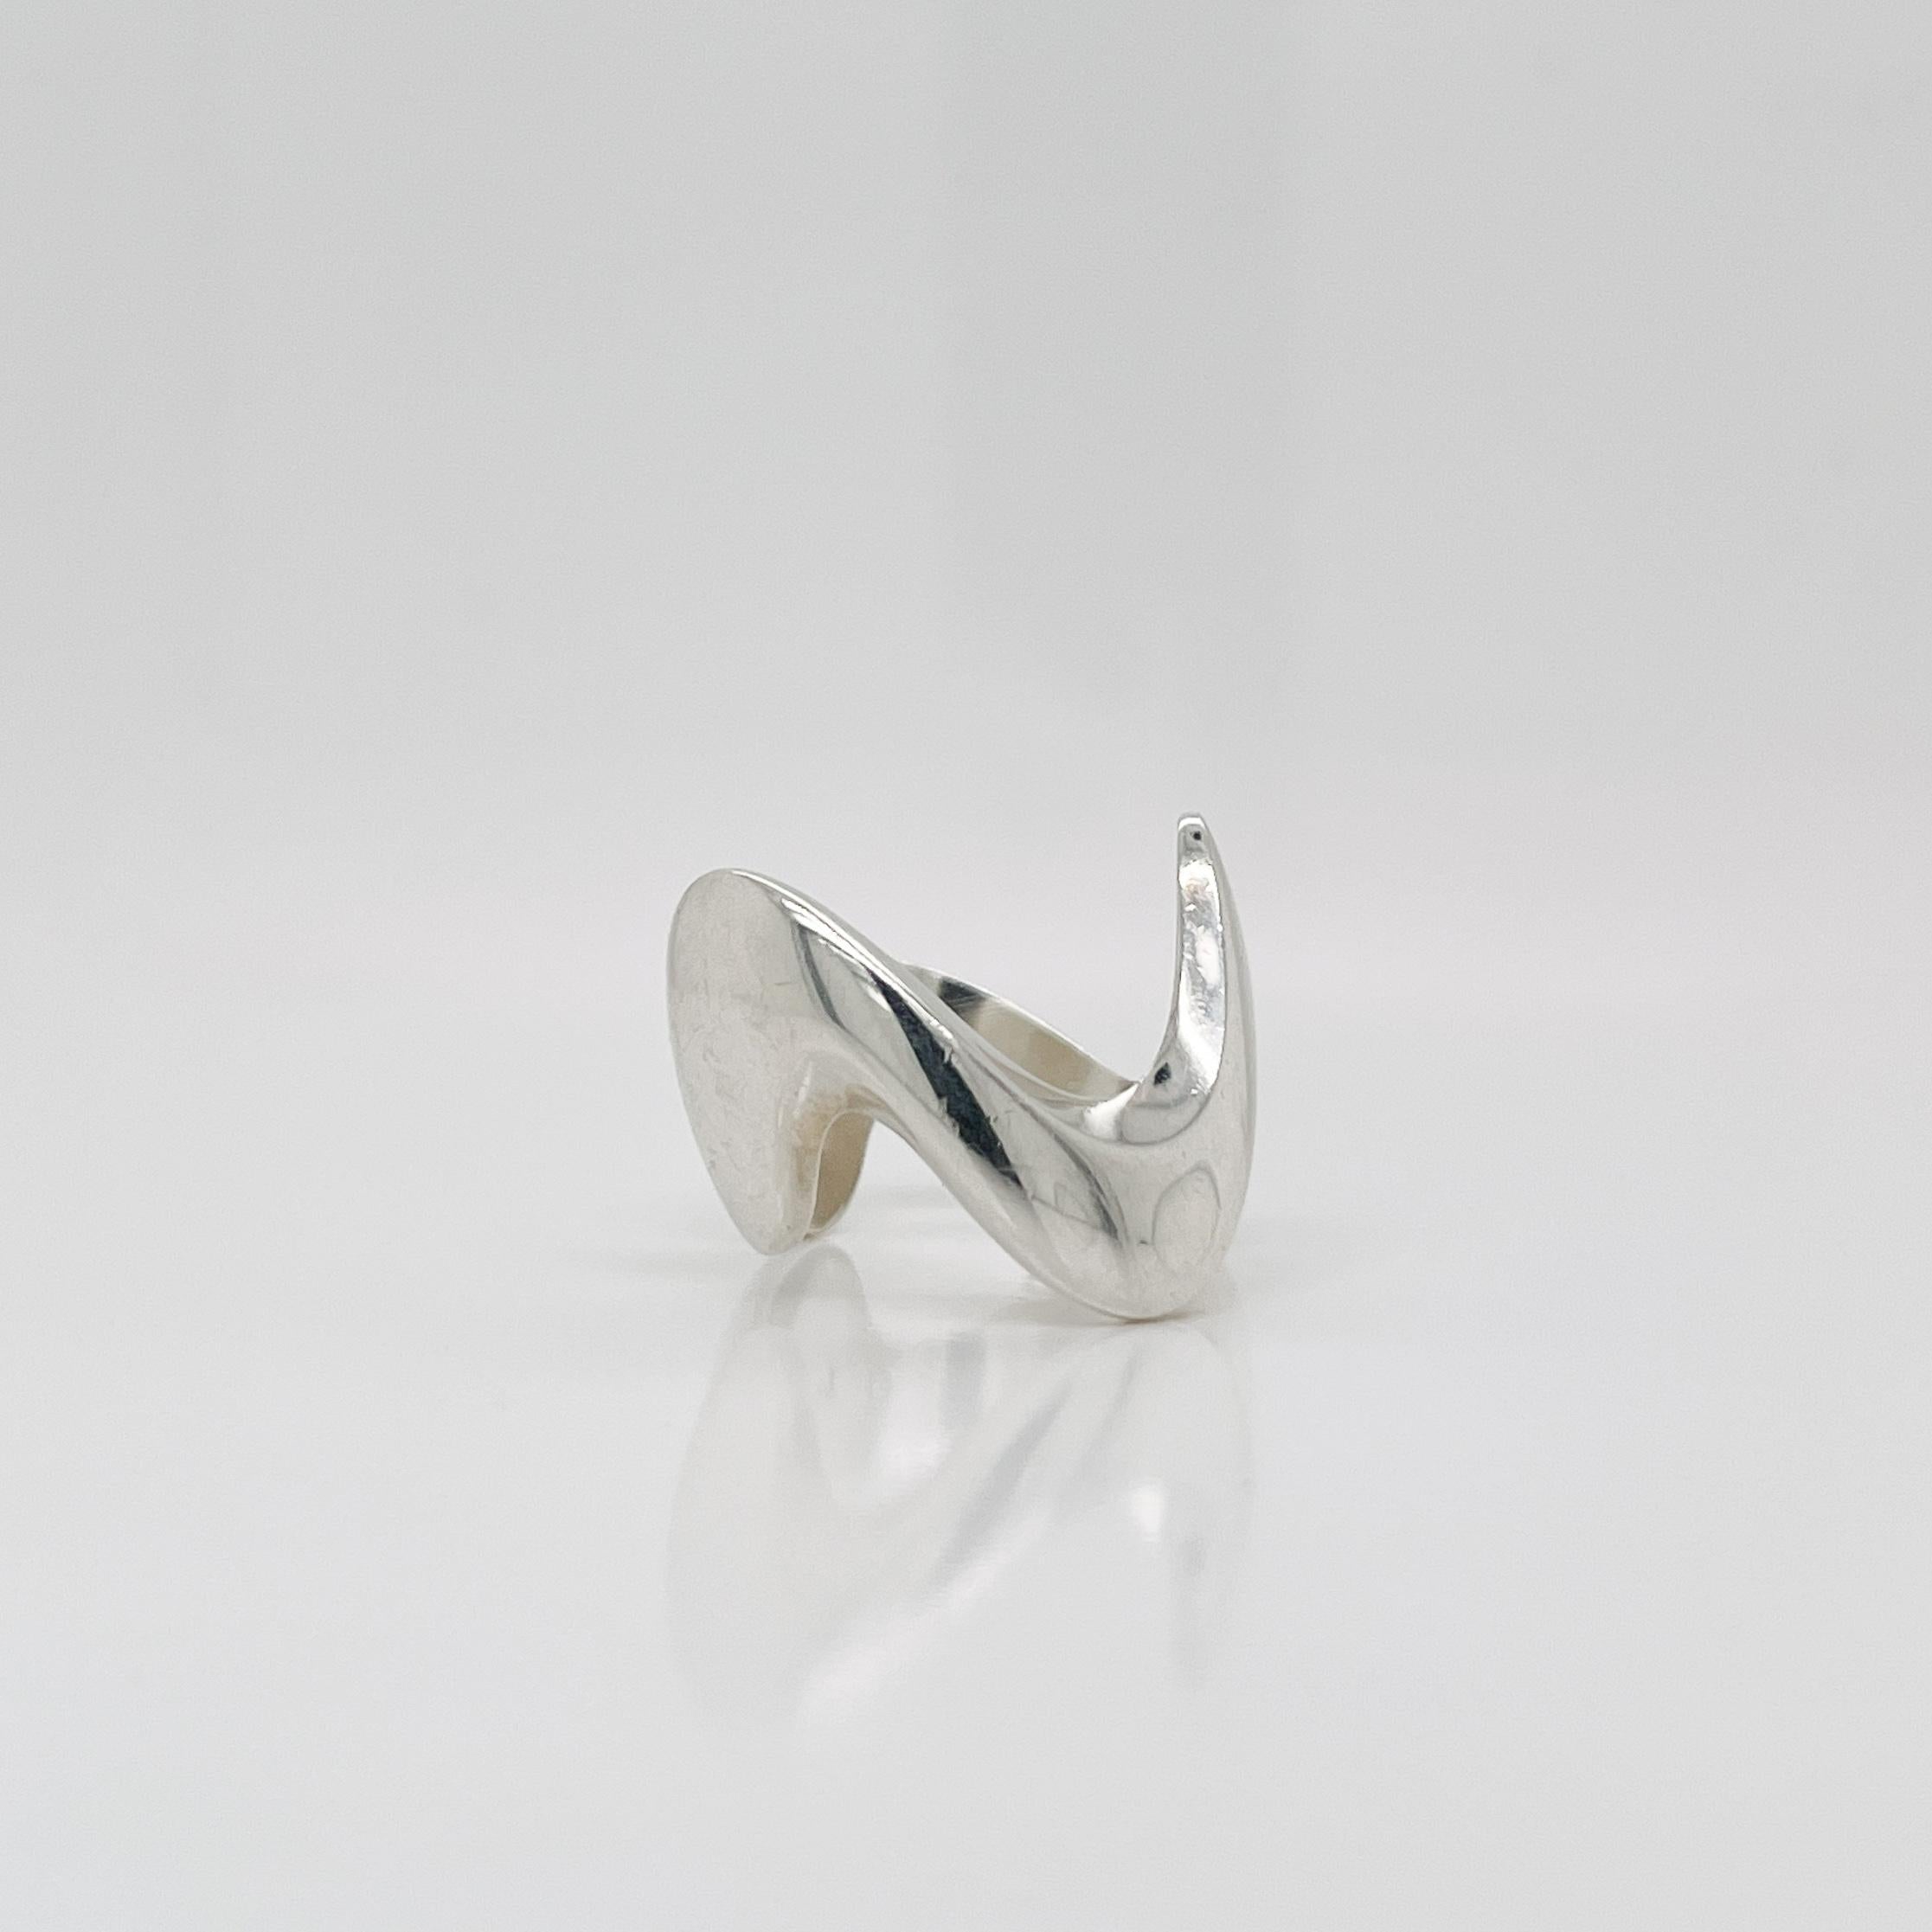 Women's or Men's Modernist Georg Jensen Sterling Silver Ring Model No. A 77 C by Ole Ishøj For Sale